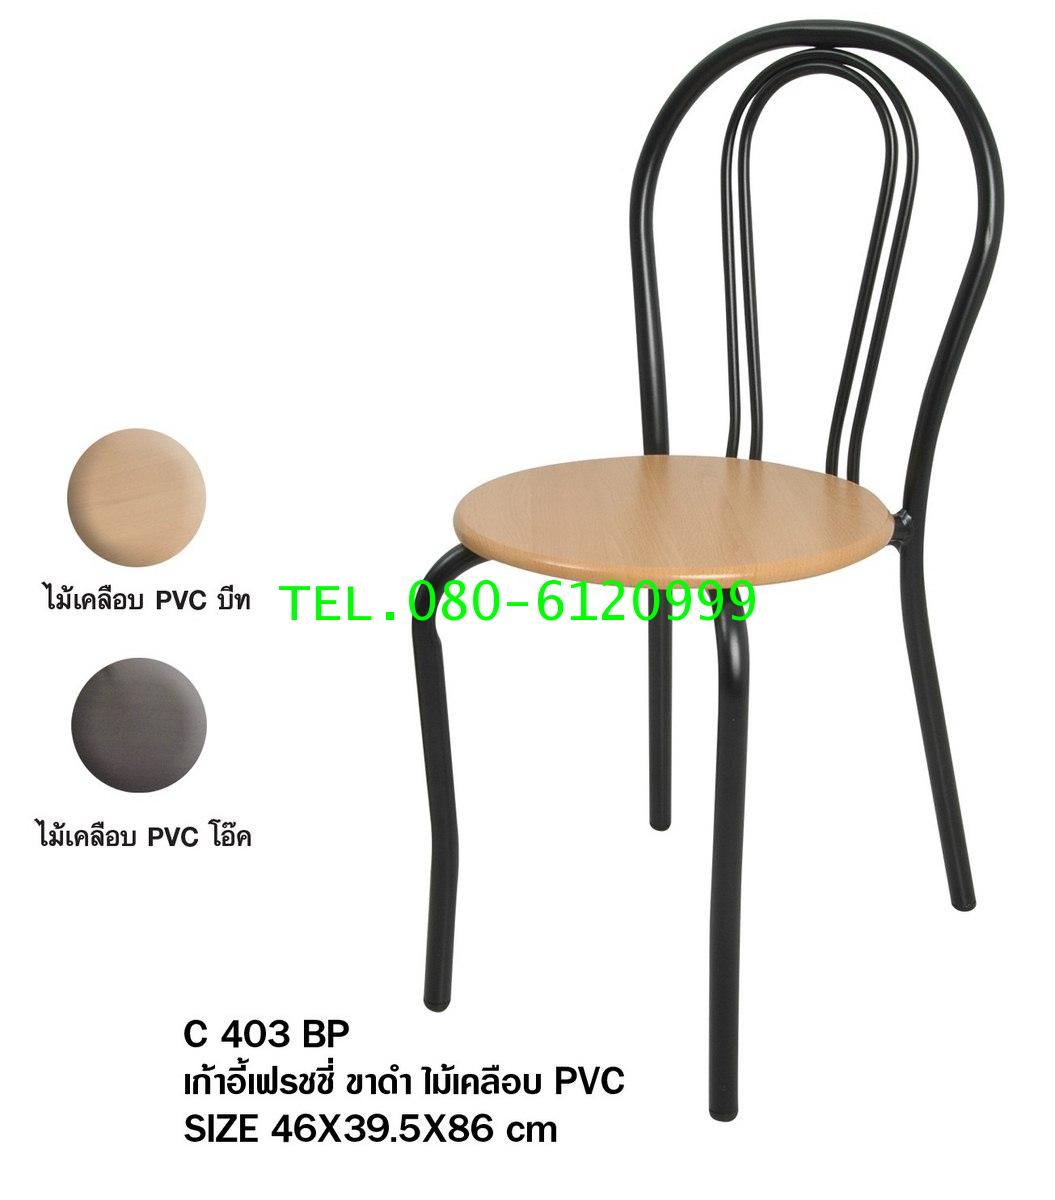 pmy29-15 เก้าอี้เฟรซซี่ ขาดำ ไม้เคลือบ PVC